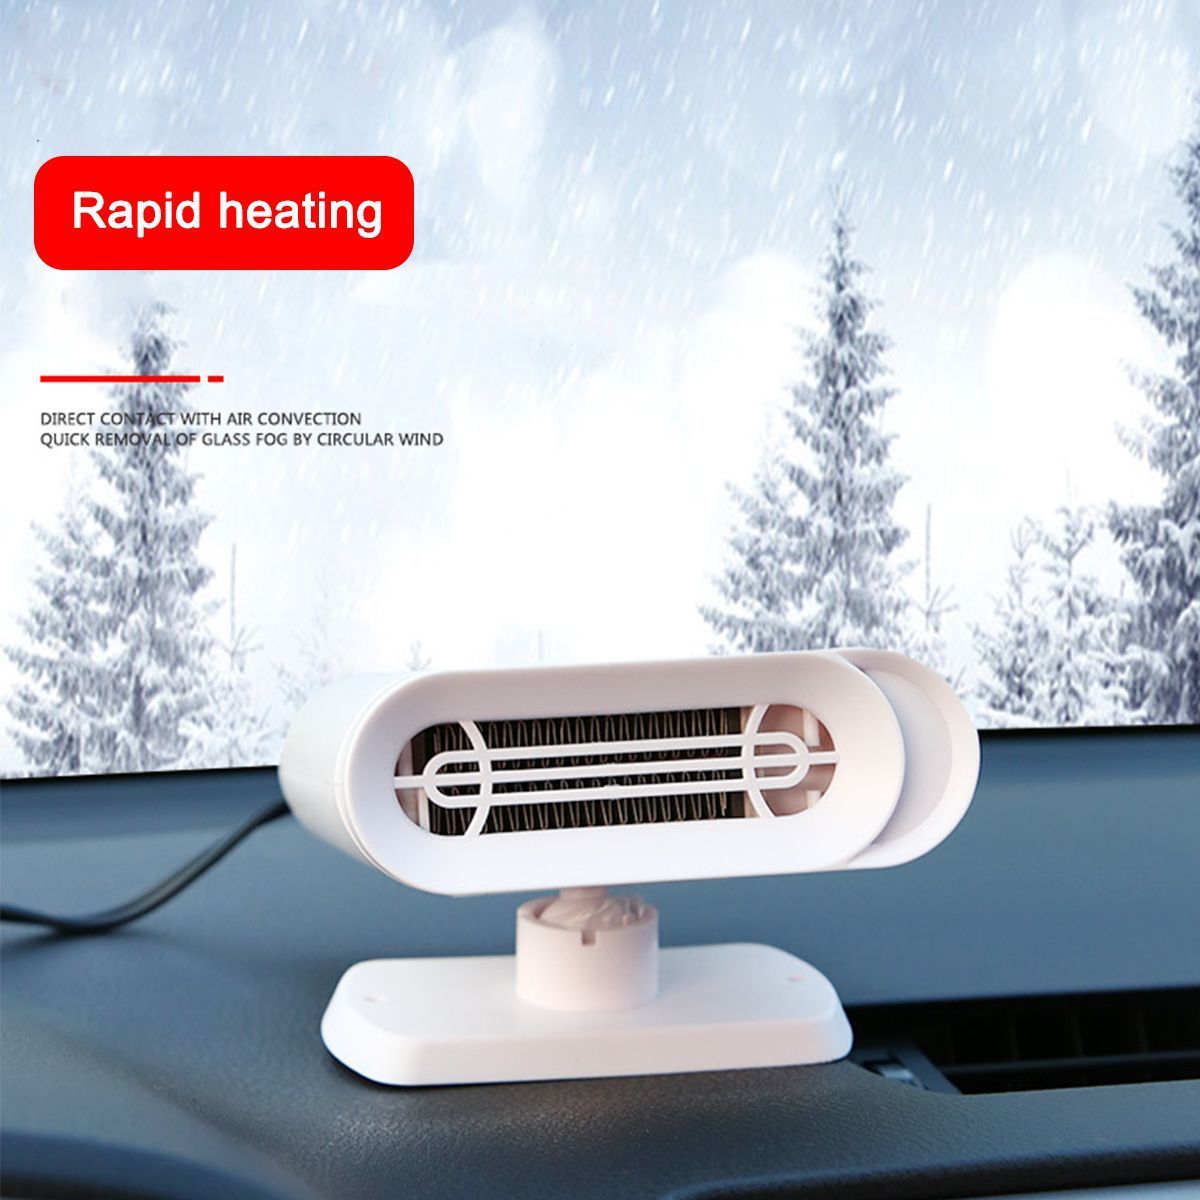 12V-24V-2-in-1Air-Purification-Heater-Auto-Car-Heater-Cooling-Fan-Defrost-Defogging-1599093